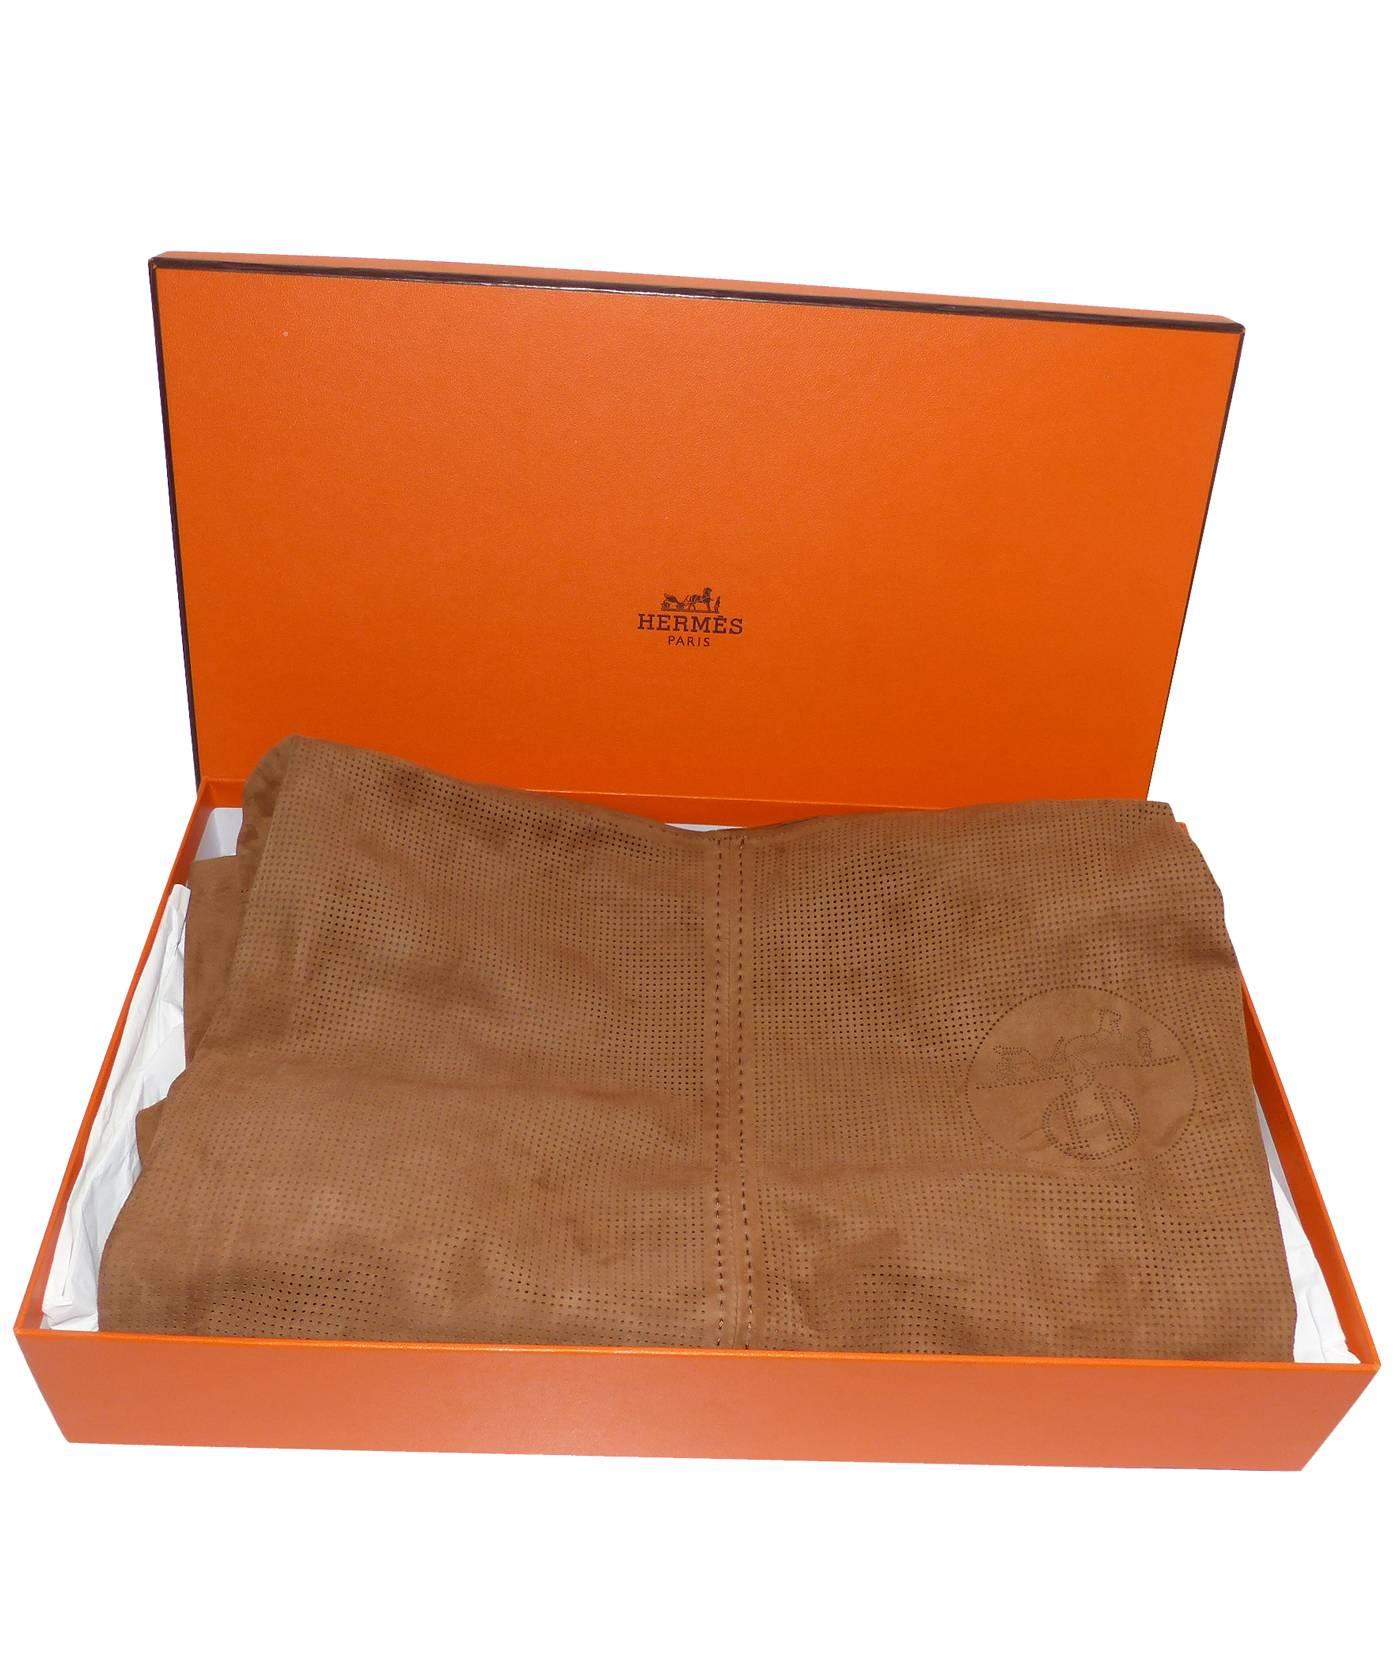 Gorgeous Hermès Tunique Perforated Brown Suede / EXCELLENTE CONDITION  6